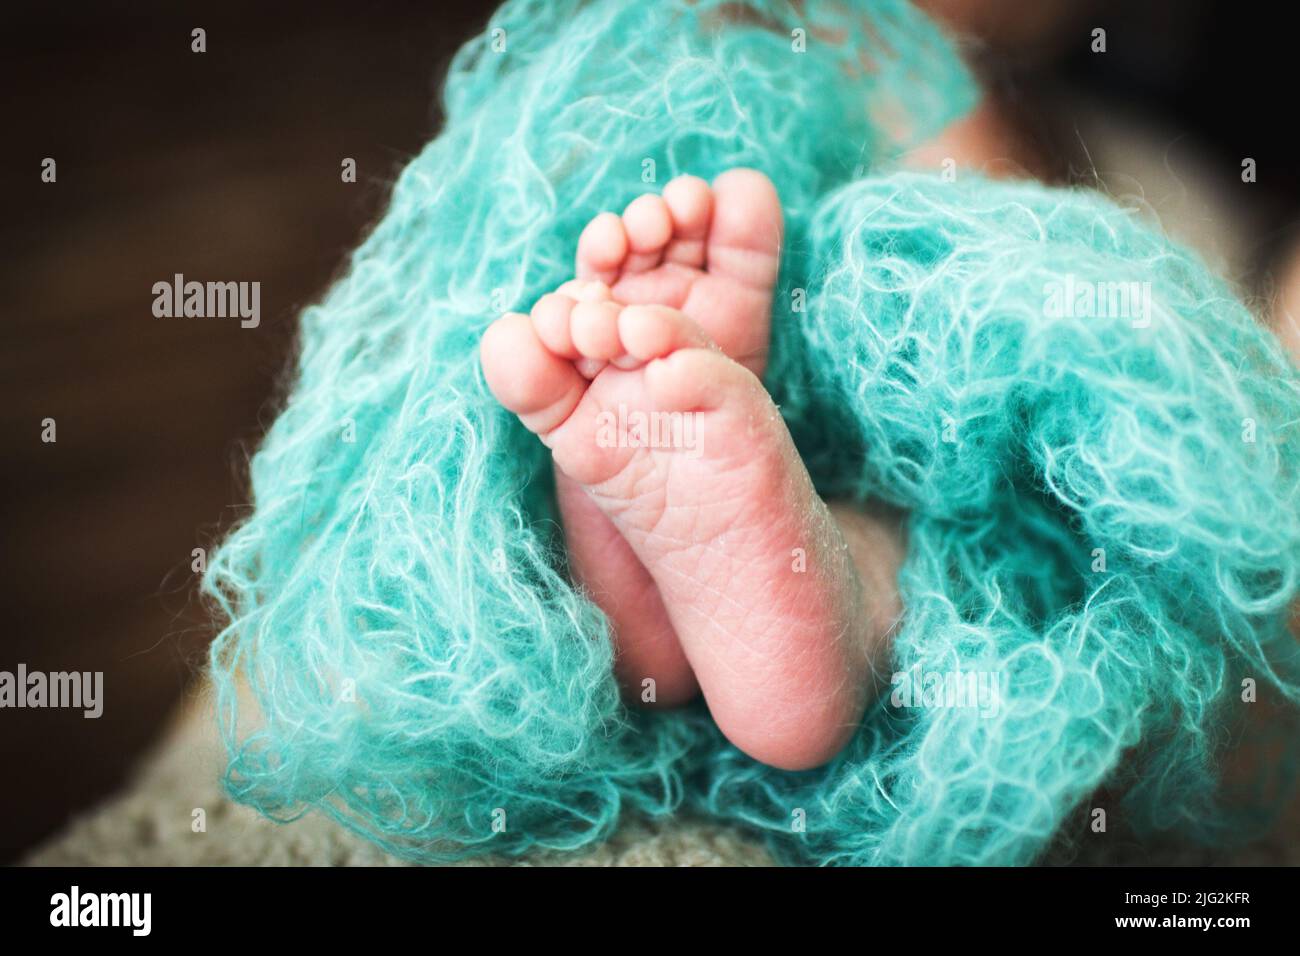 newborn baby feet. kids legs wrapped in a blue blanket Stock Photo